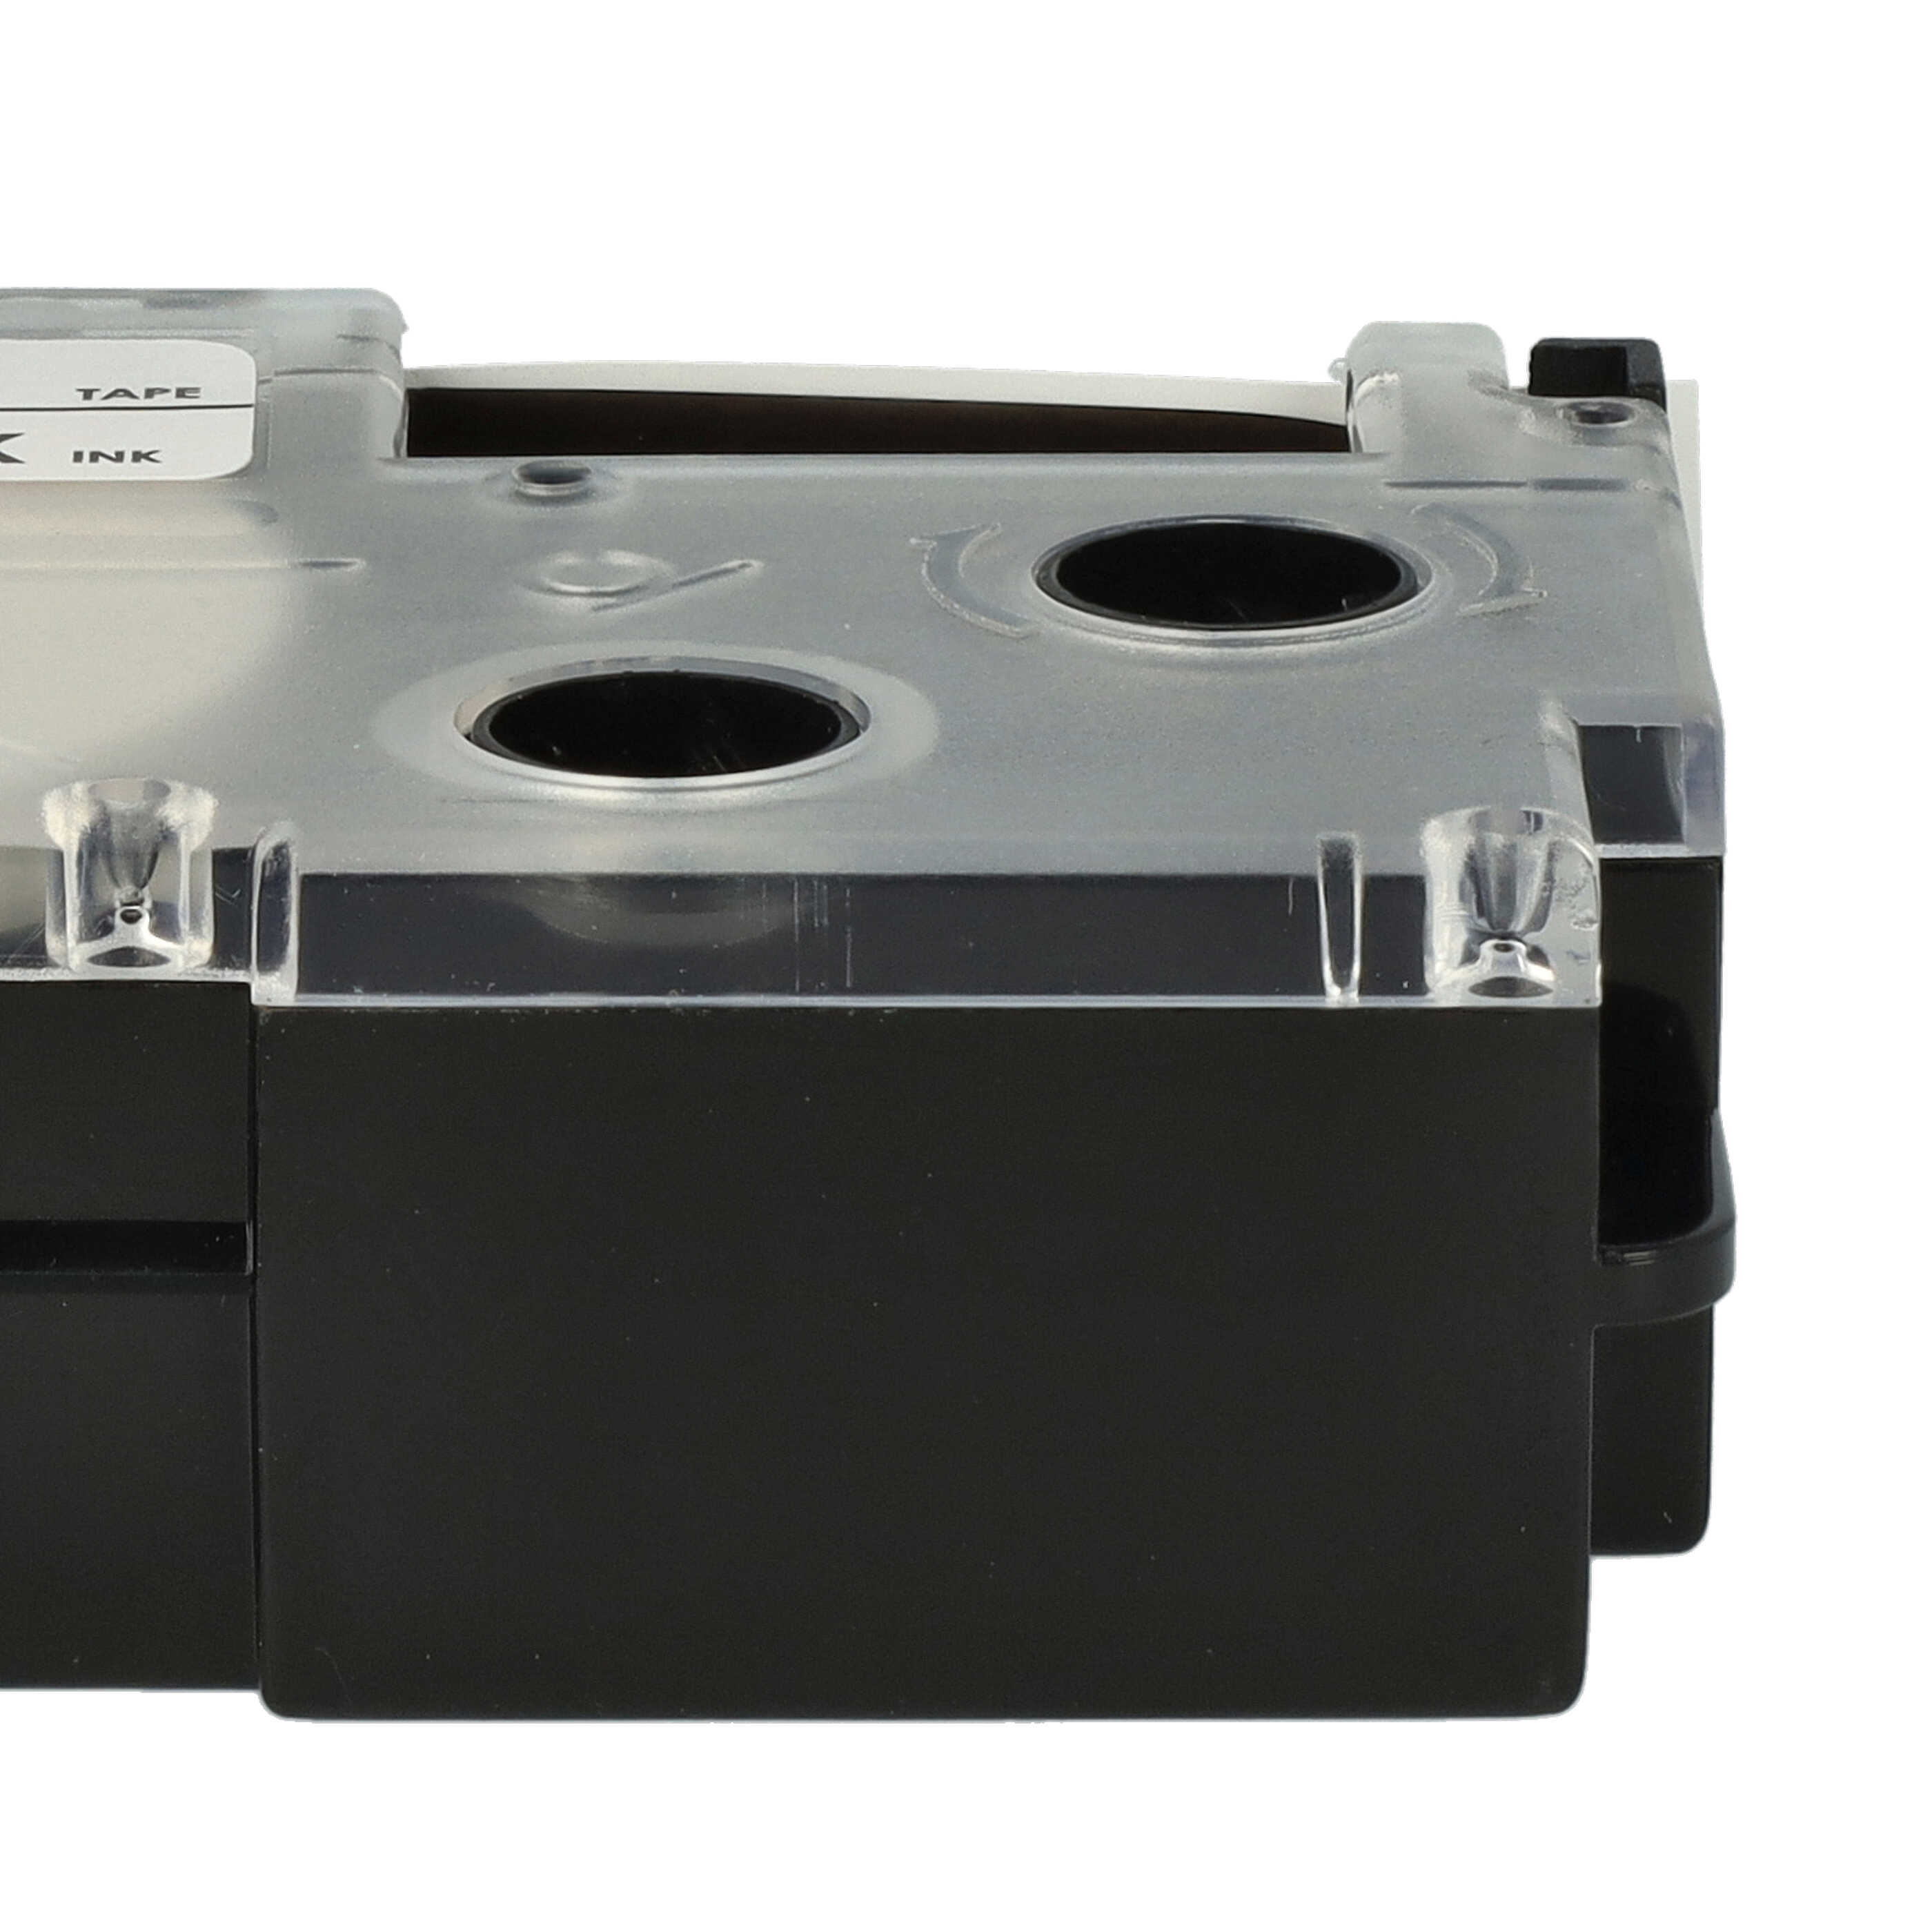 10x Casete cinta escritura reemplaza Casio XR-18WE, XR-18WE1 Negro su Blanco